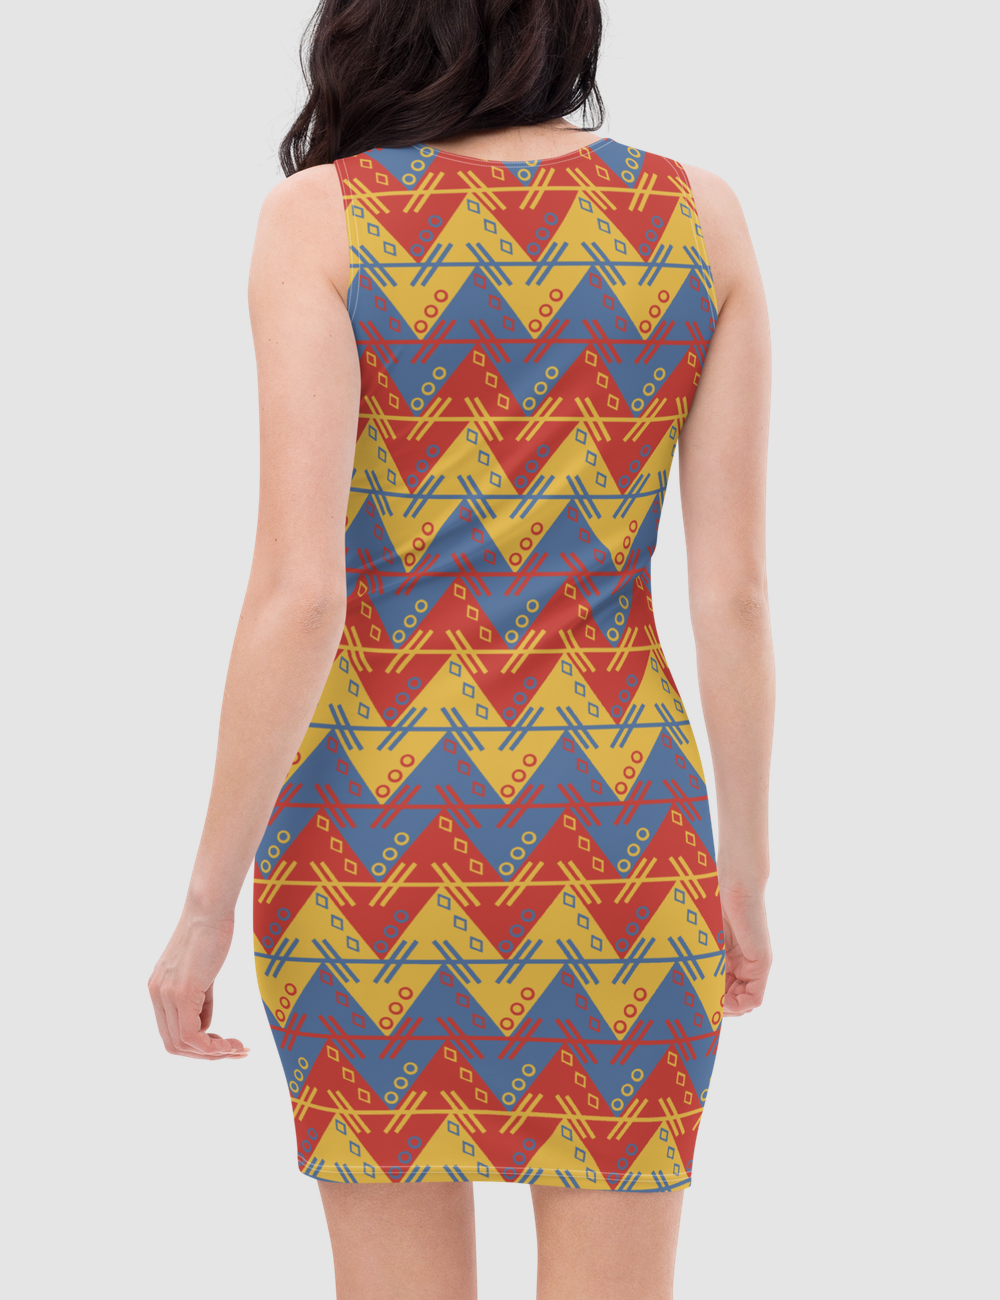 Aztecan Multicolored Chevron Women's Sleeveless Fitted Sublimated Dress OniTakai